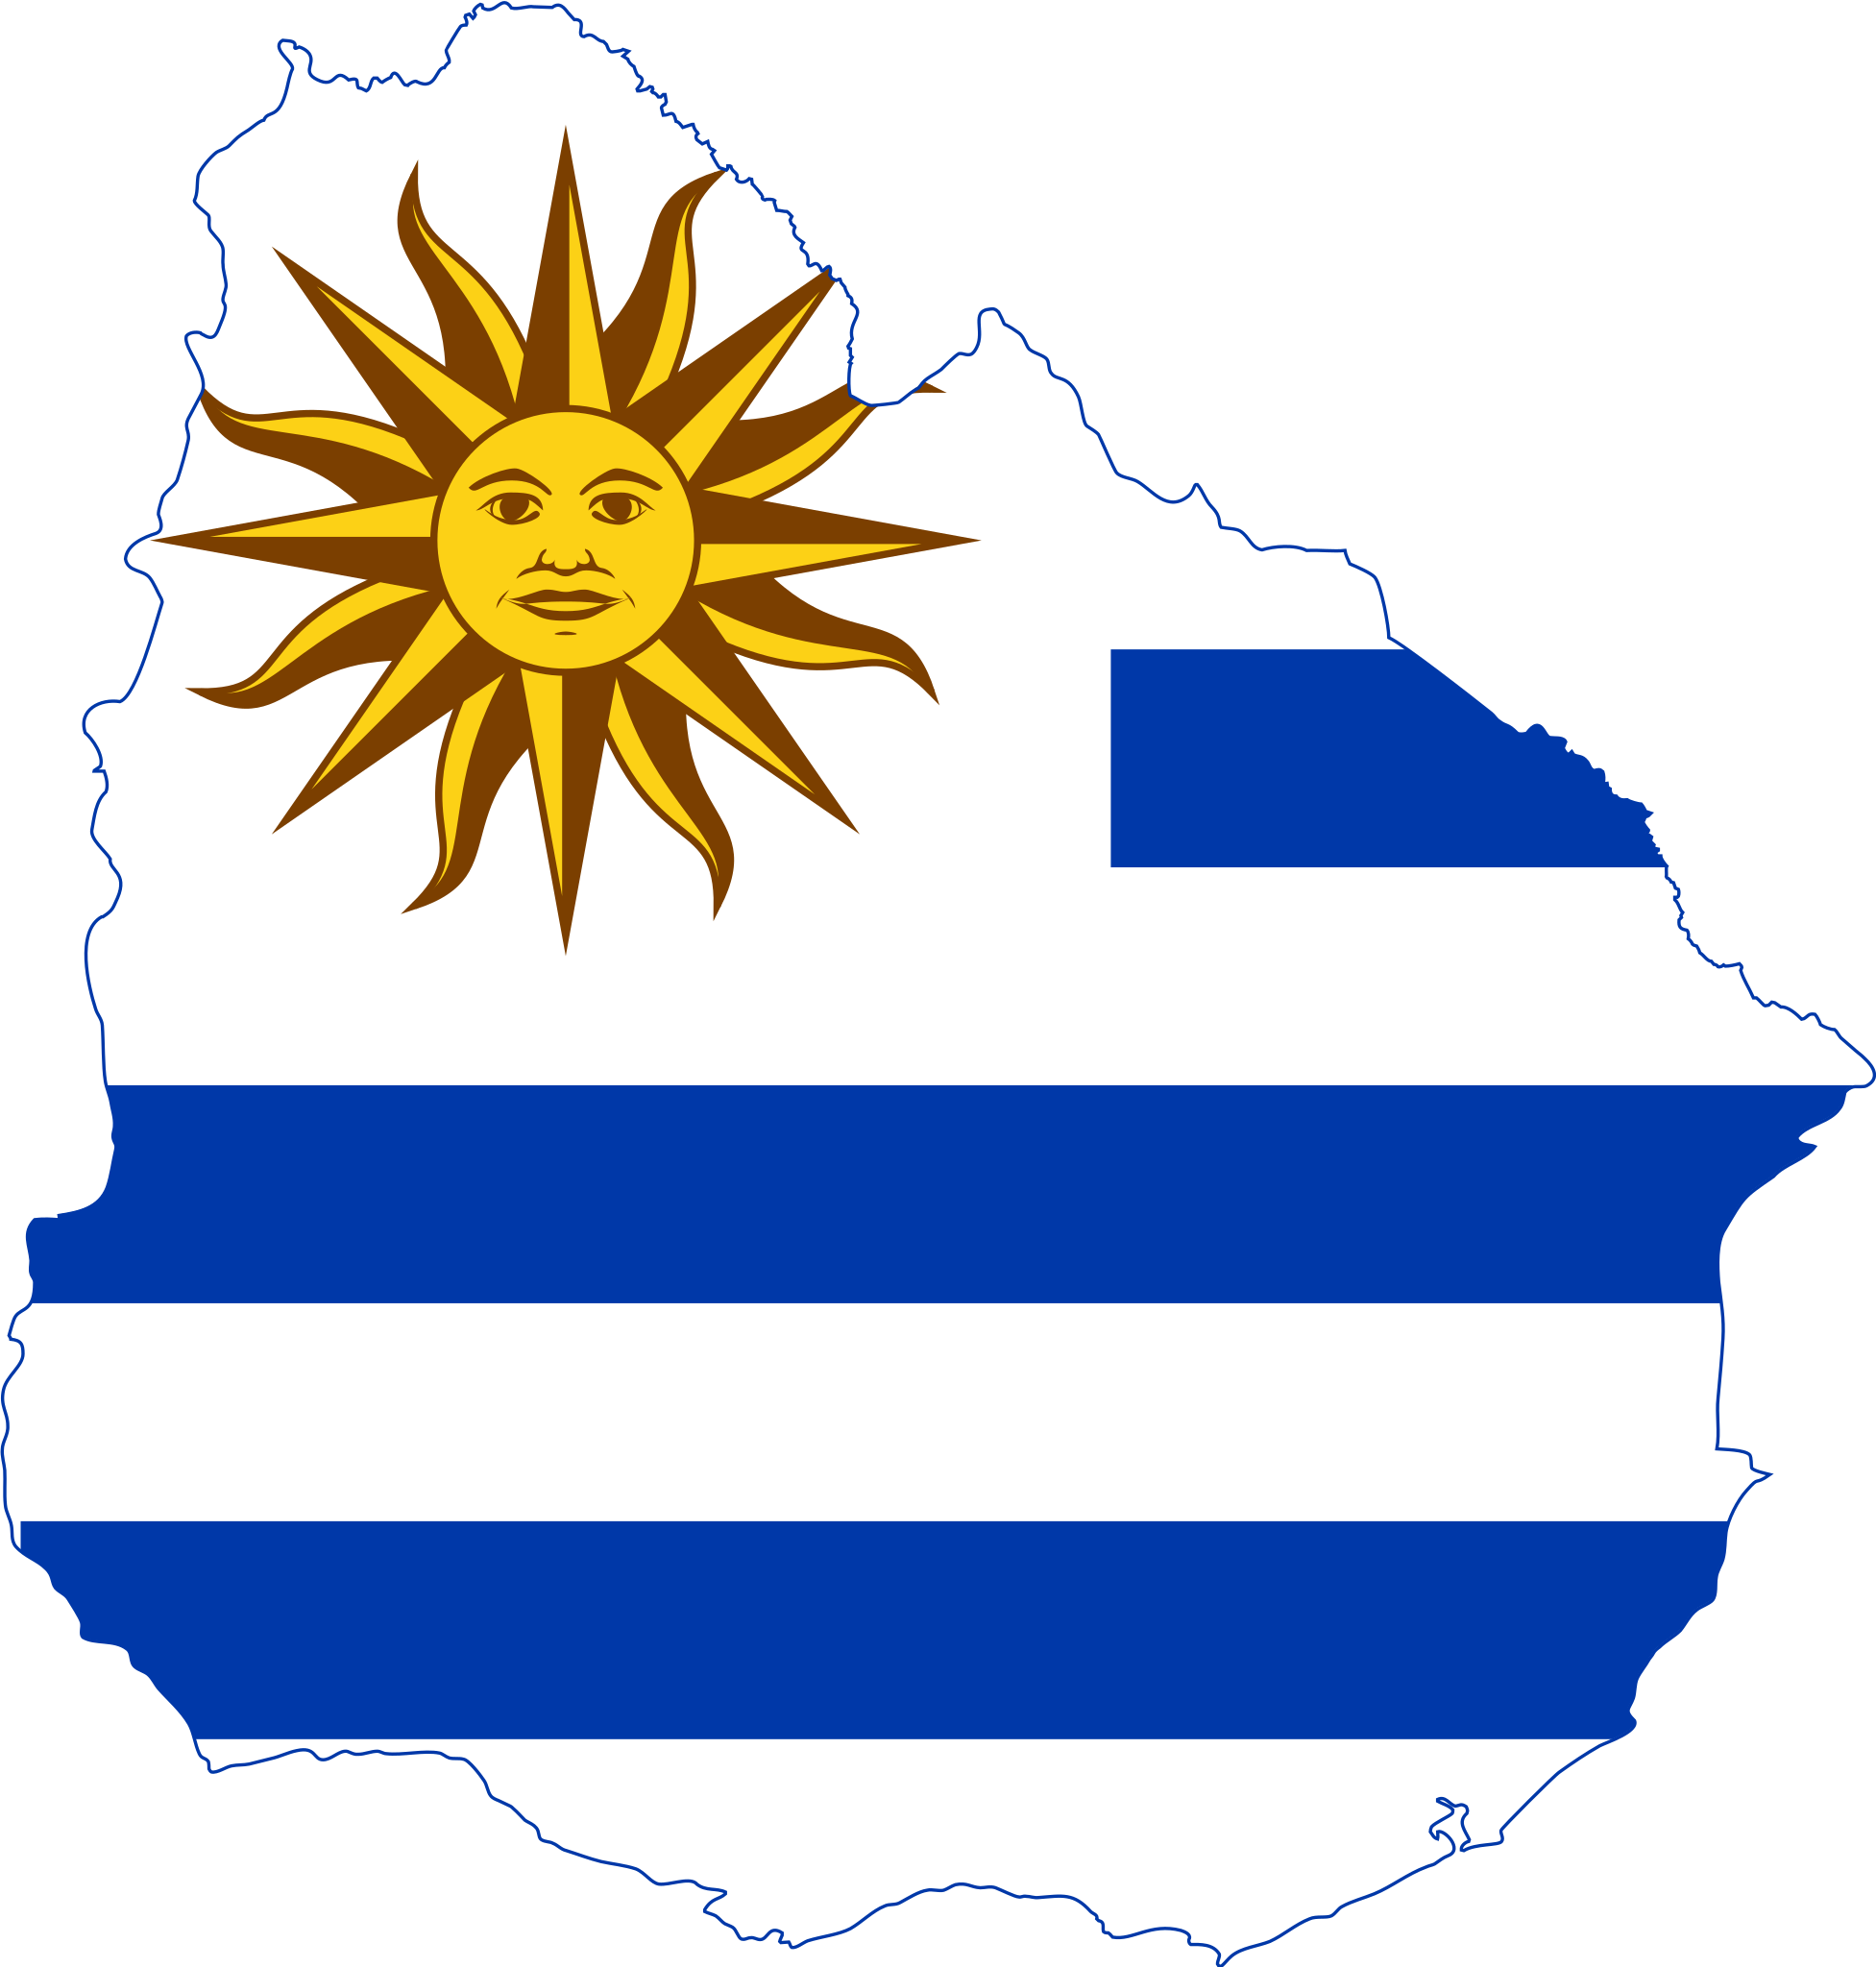 Download PNG image - Uruguay Flag PNG Clipart 